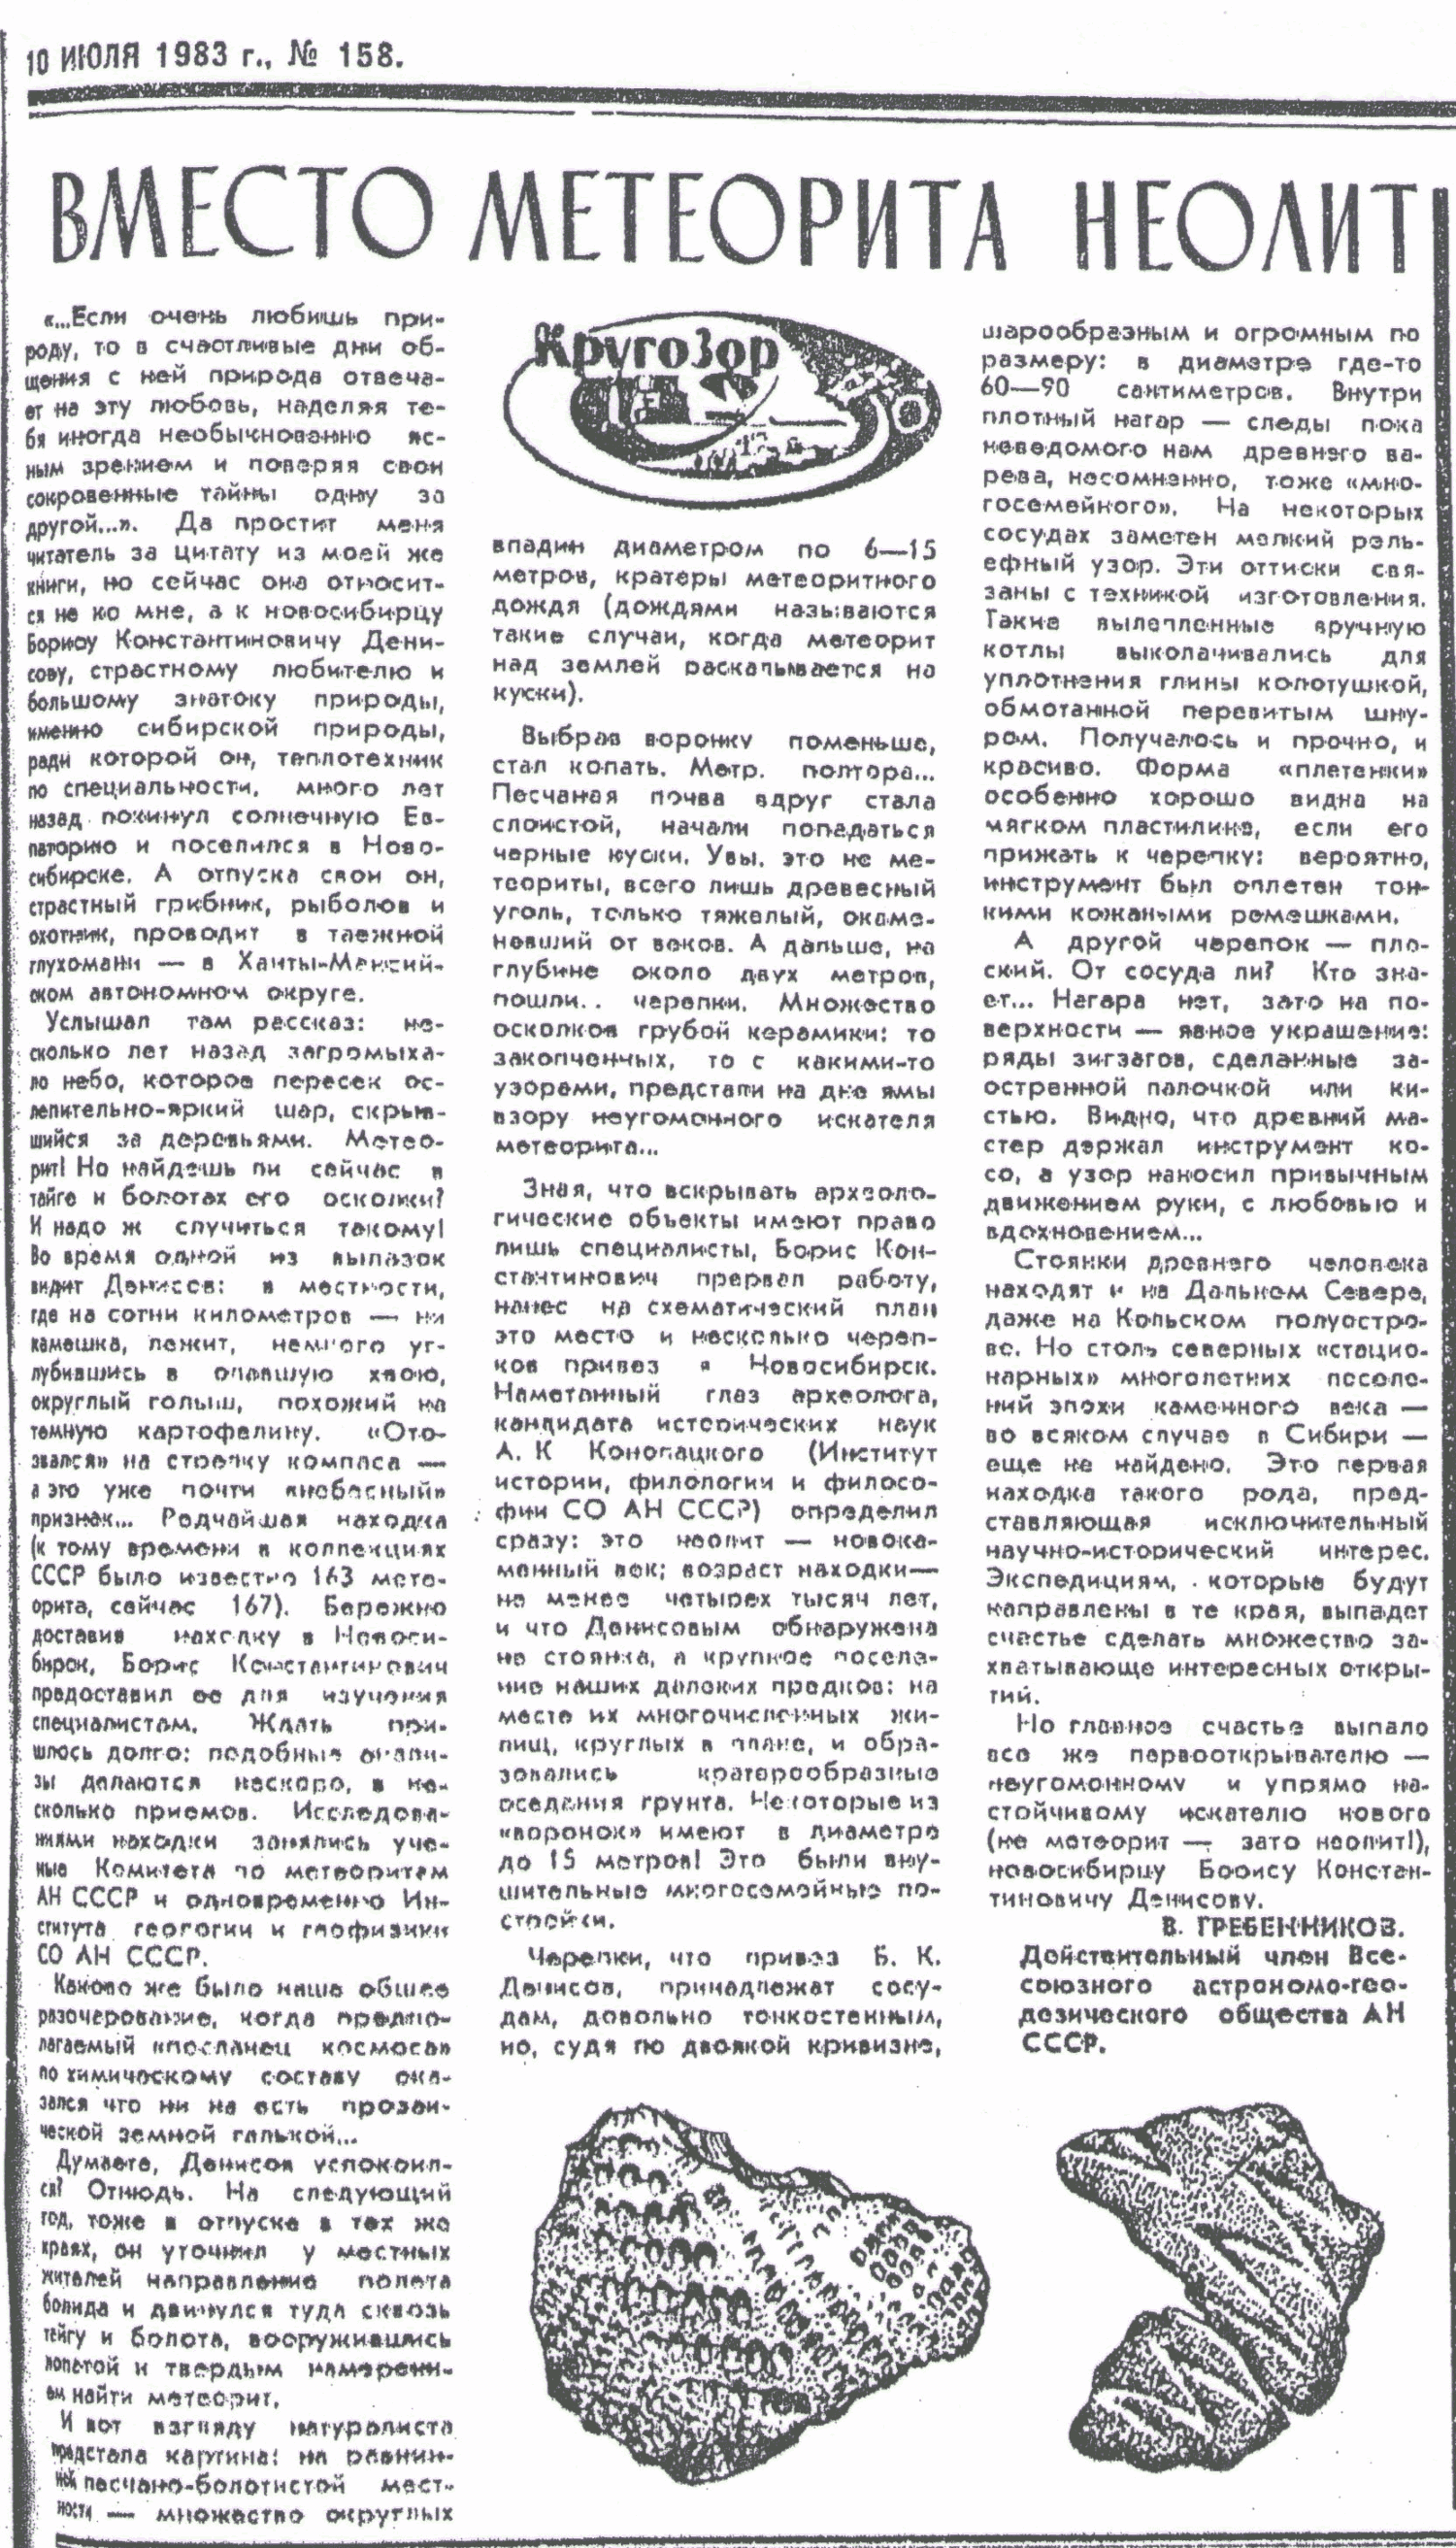 Вместо метеорита неолит. В.С. Гребенников. Советская Сибирь (Новосибирск), 10.07.1983, №158 (19112), с.3. Фотокопия